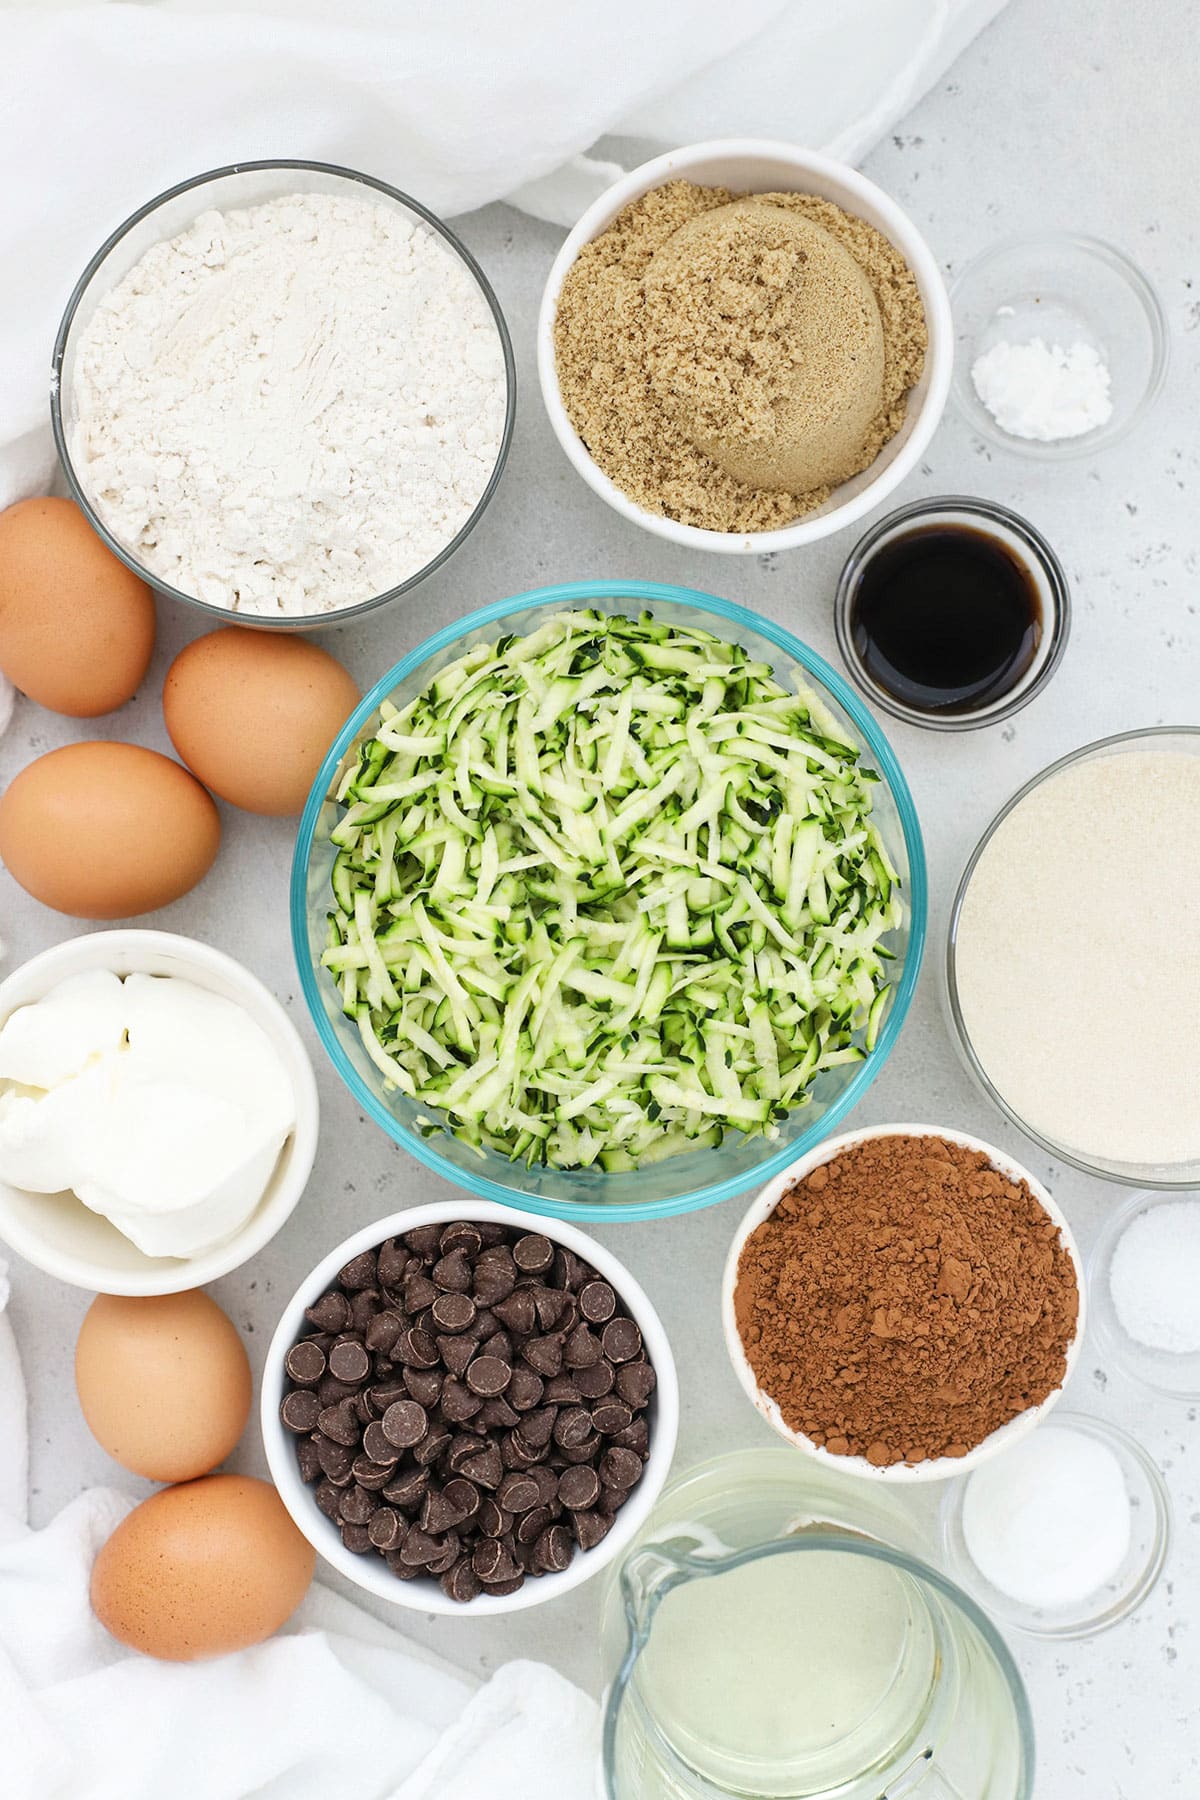 Ingredients for gluten-free chocolate zucchini cake